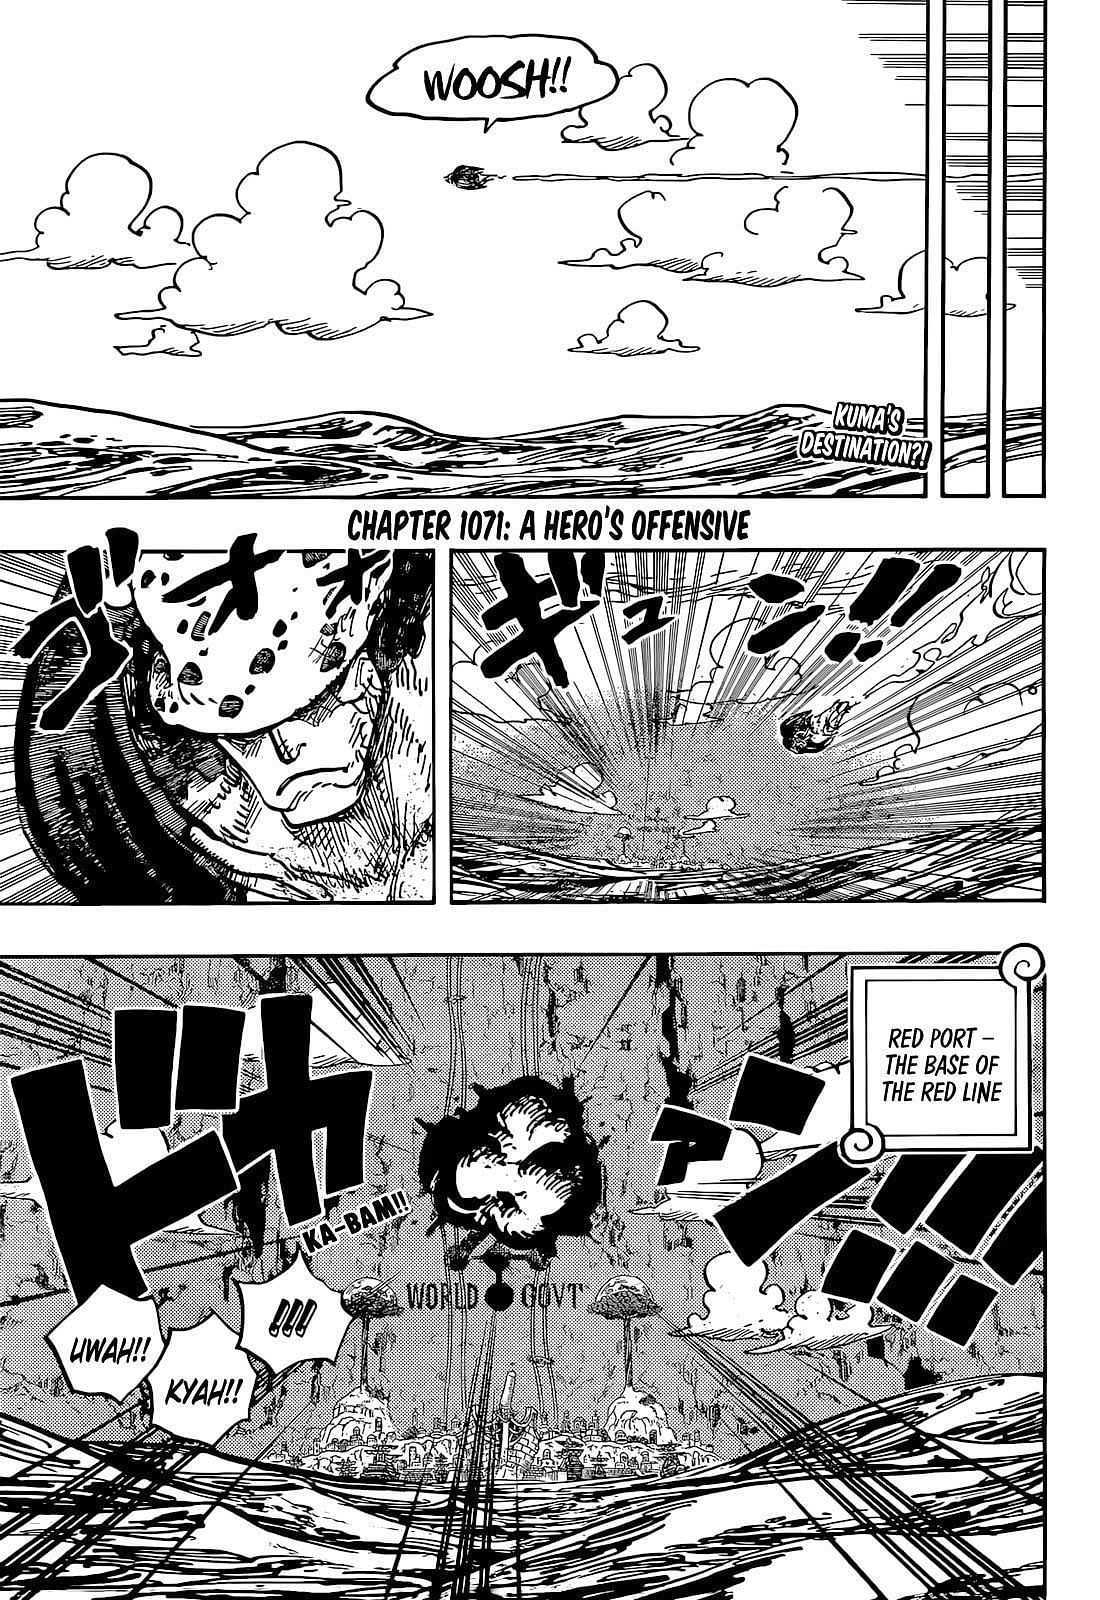 Kuma crashing the Red Line in One Piece chapter 1071 (Image via Eiichiro Oda)